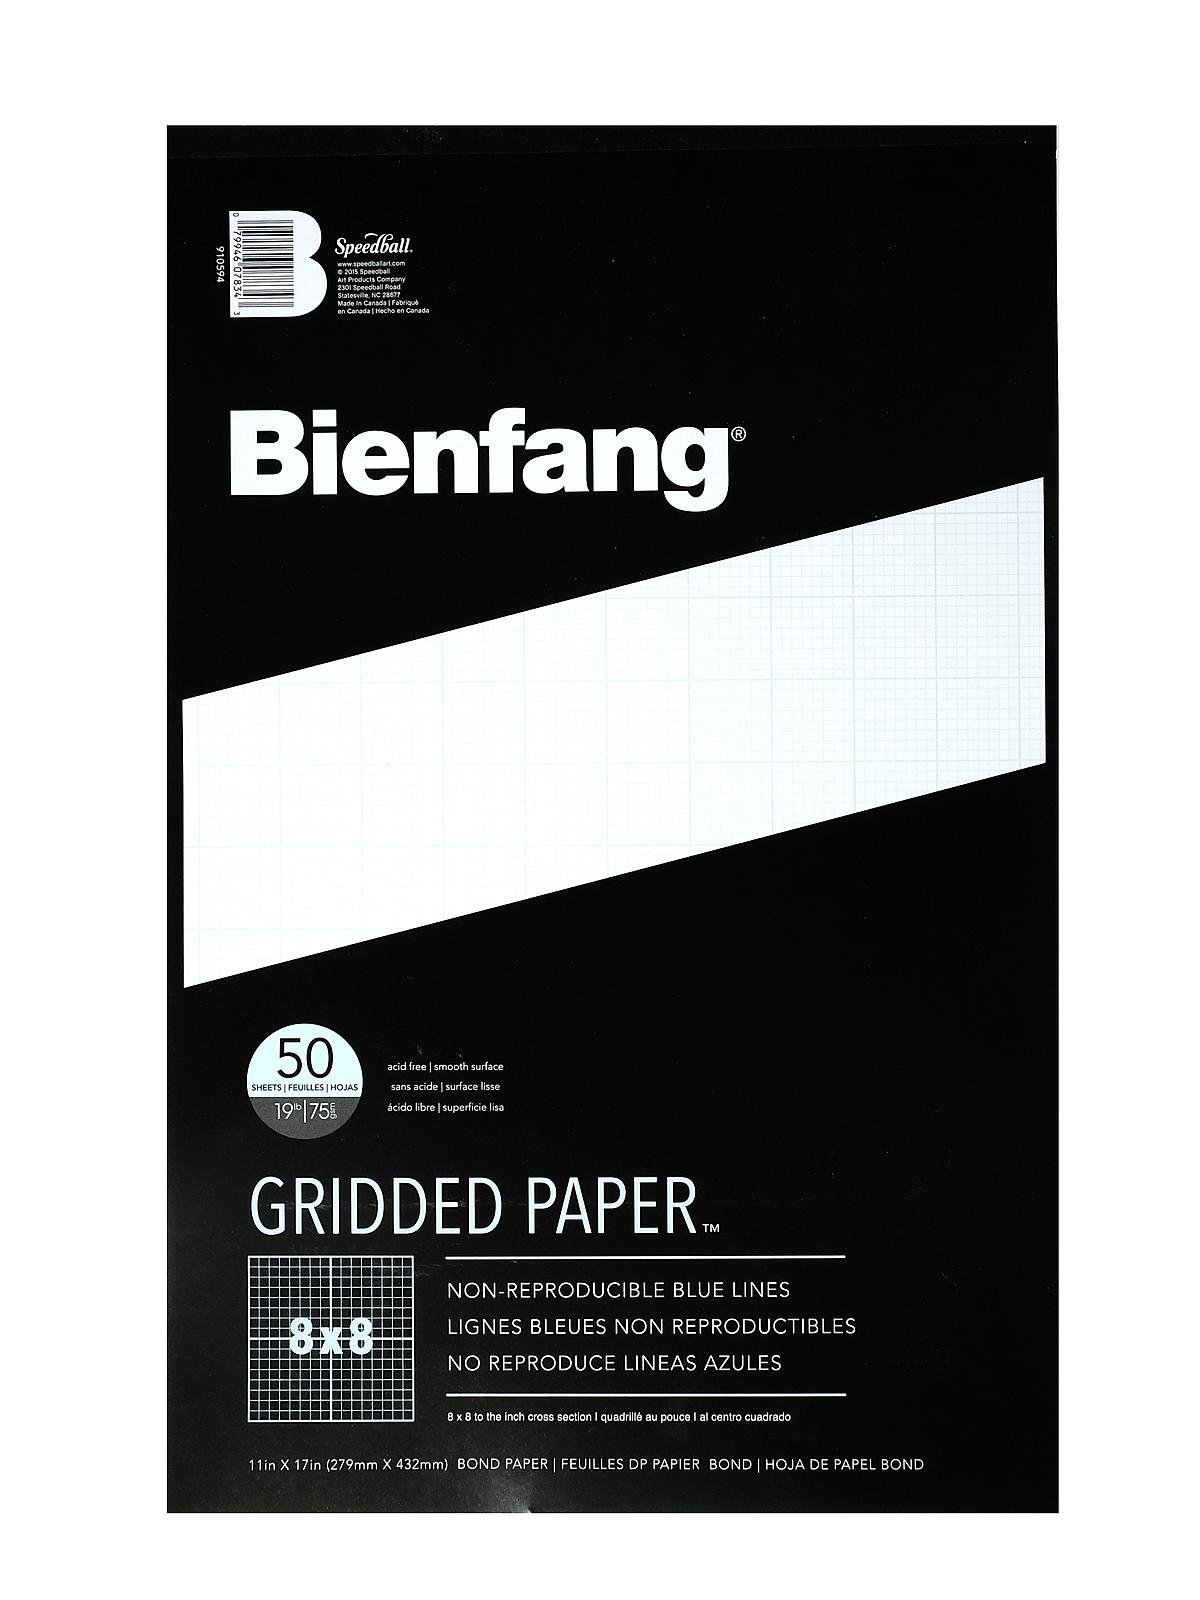 Bienfang - Gridded Paper